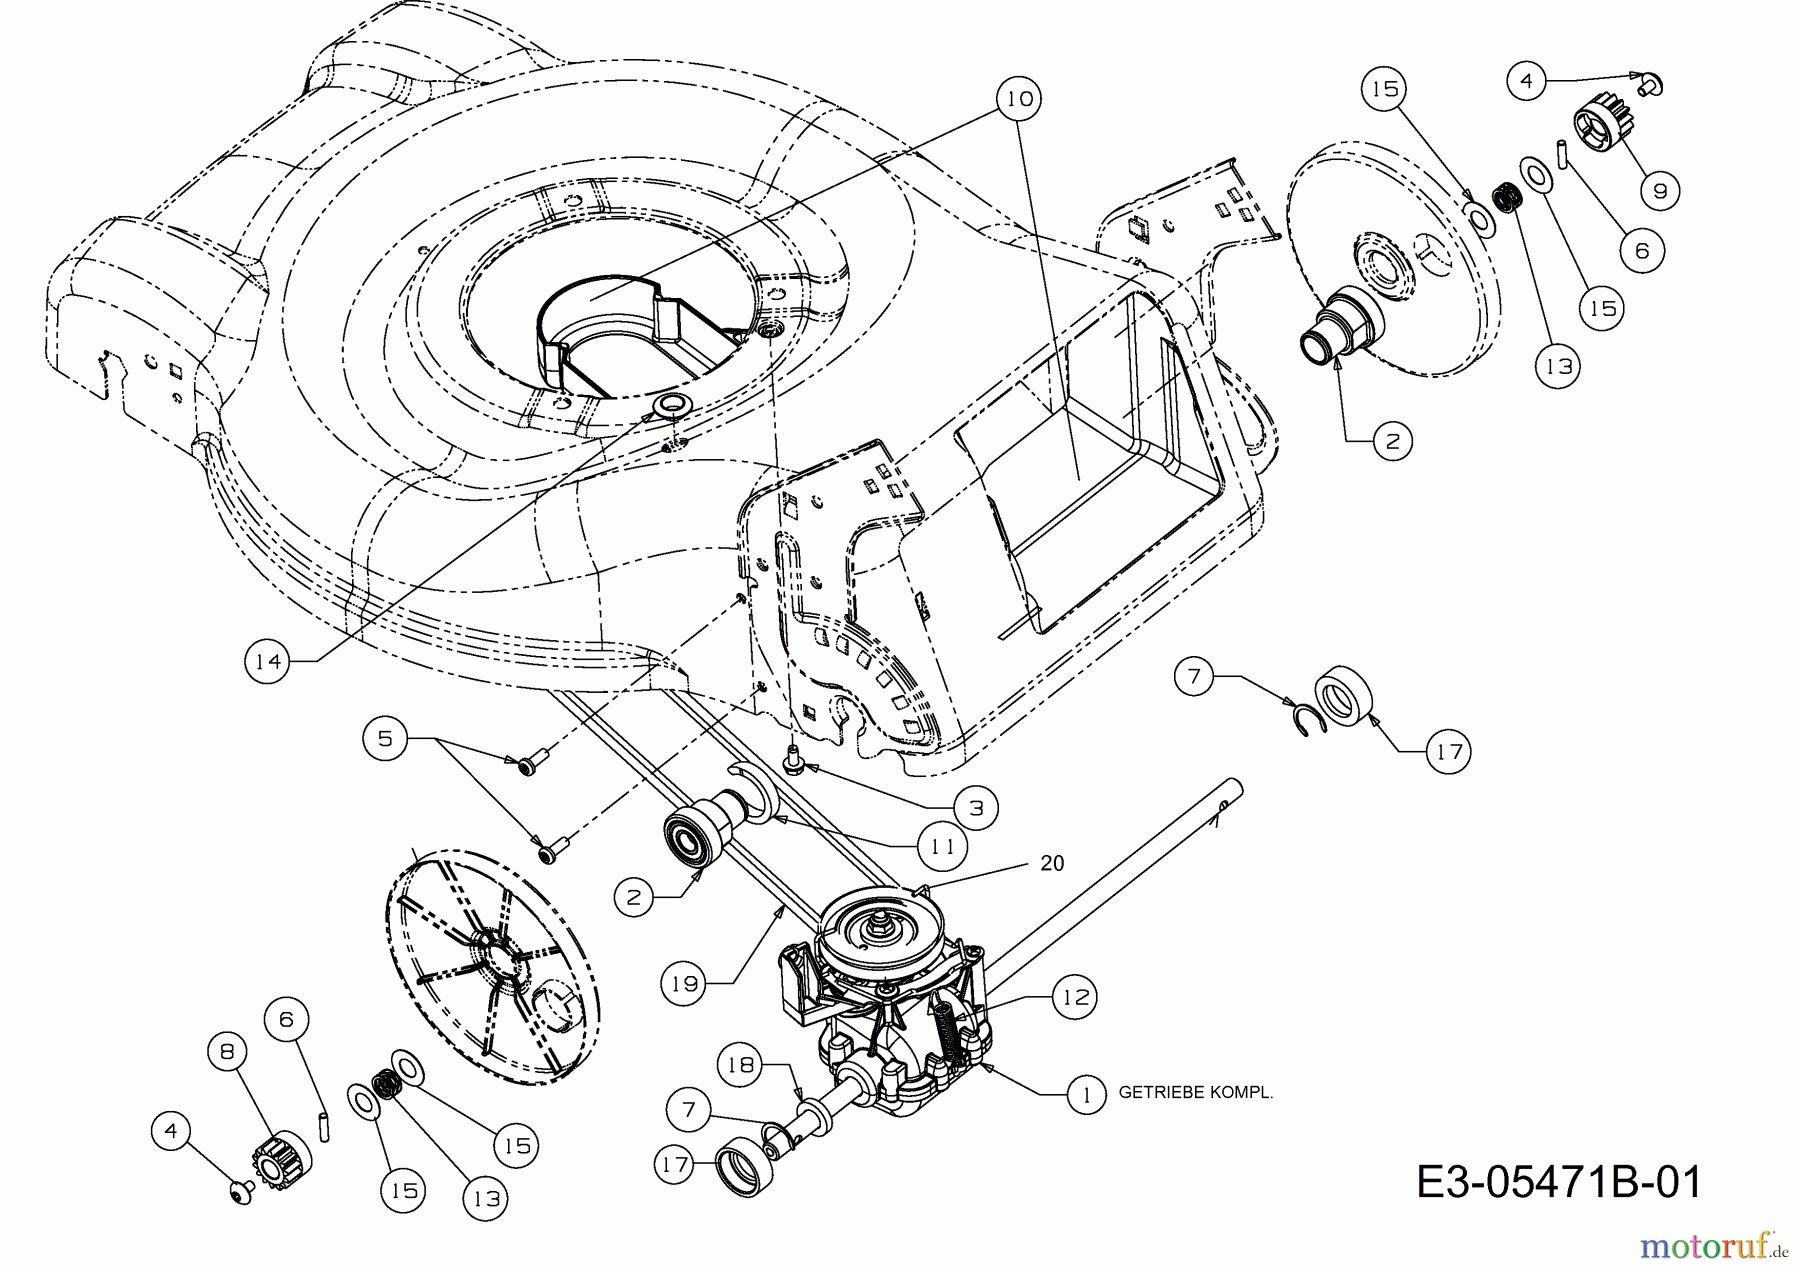  Plantiflor Motormäher mit Antrieb BMR 46 Comfort 12A-J55C601  (2013) Getriebe, Keilriemen